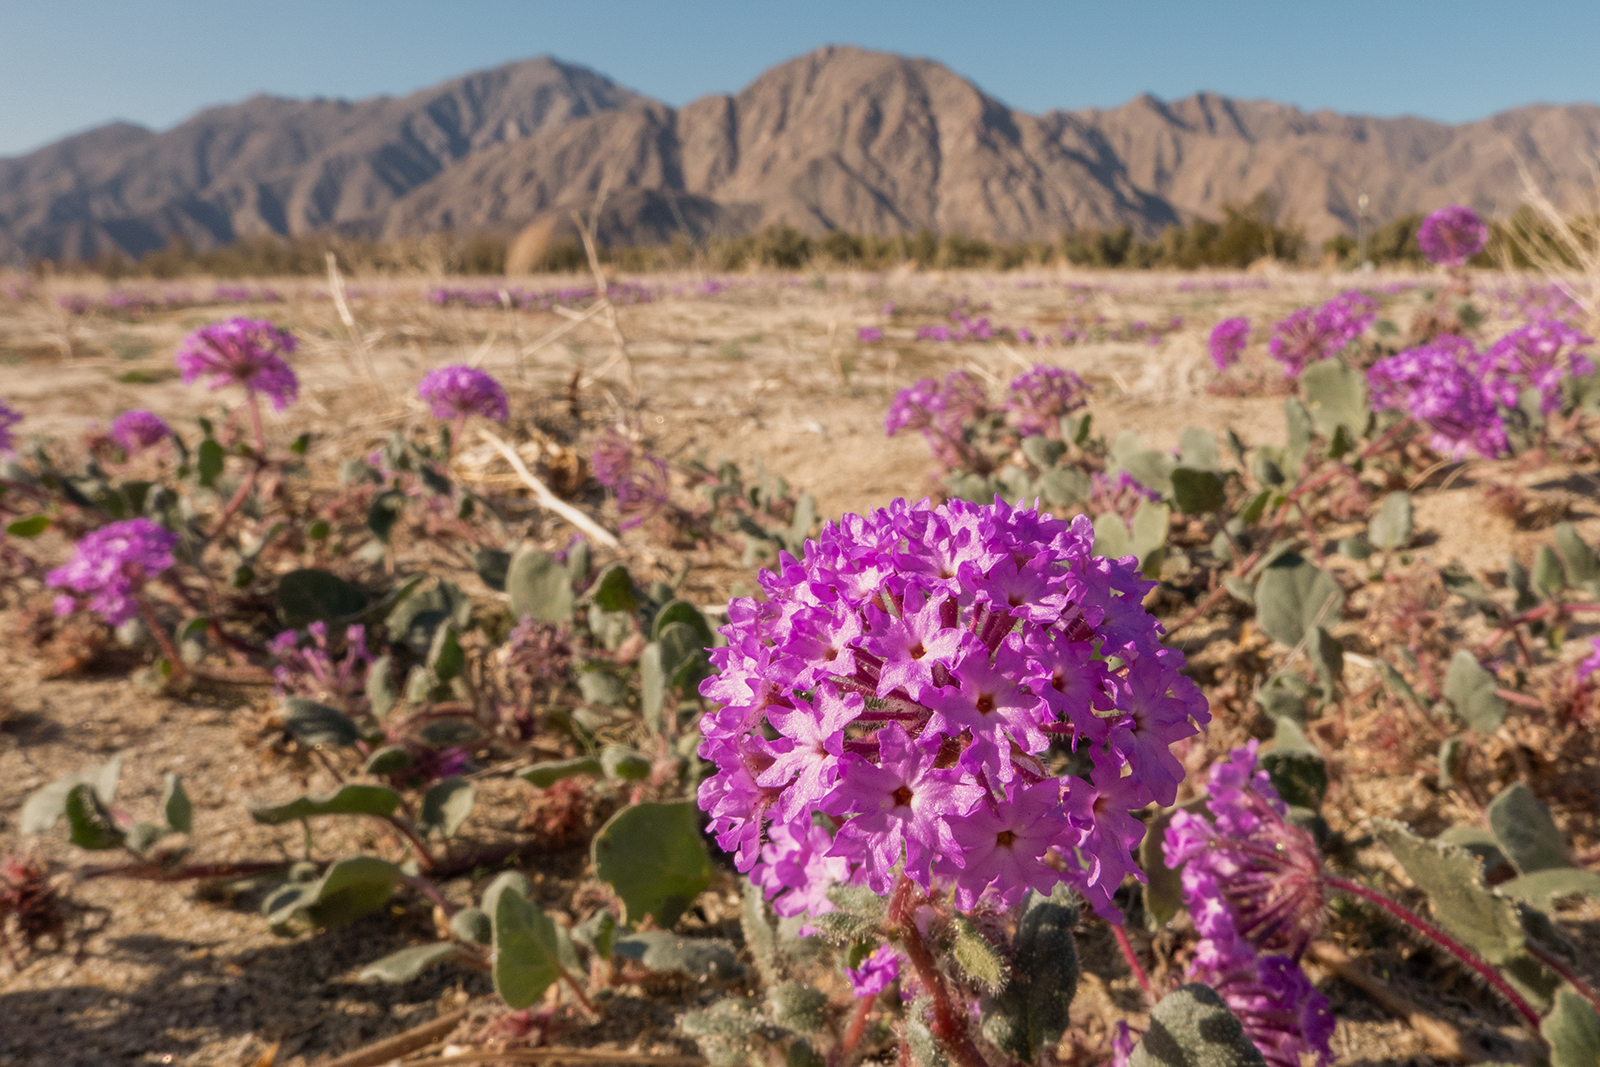 Purple sand verbena adds color to the desert landscape in Borrego Springs.